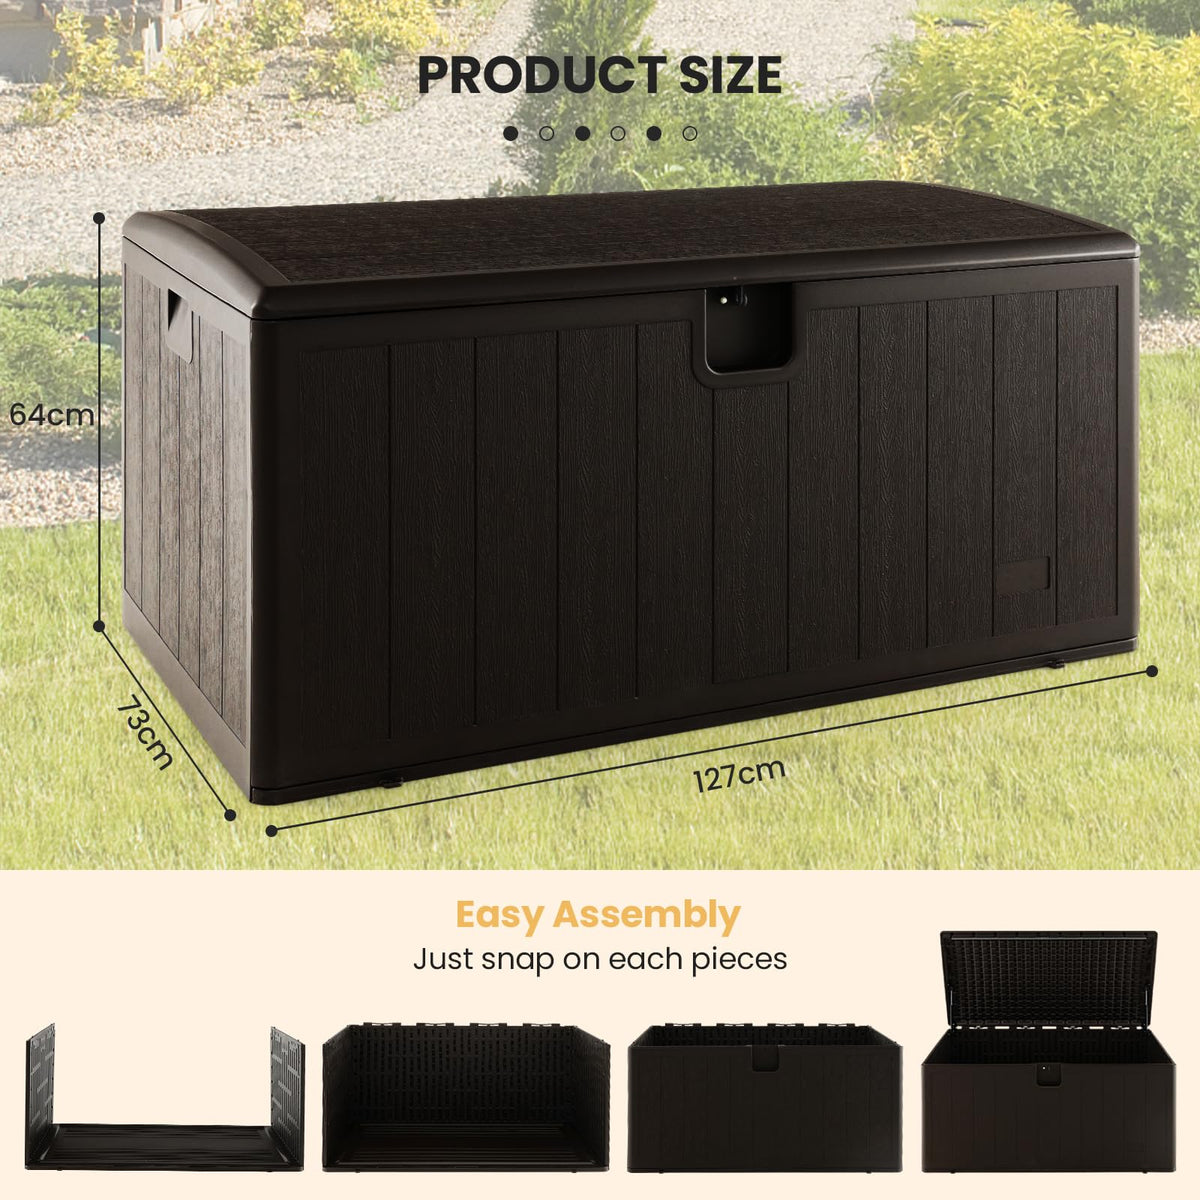 Giantex 492 L Outdoor Storage Desk Box, Weather Resistant Resin Storage Bin with Lid, Brown